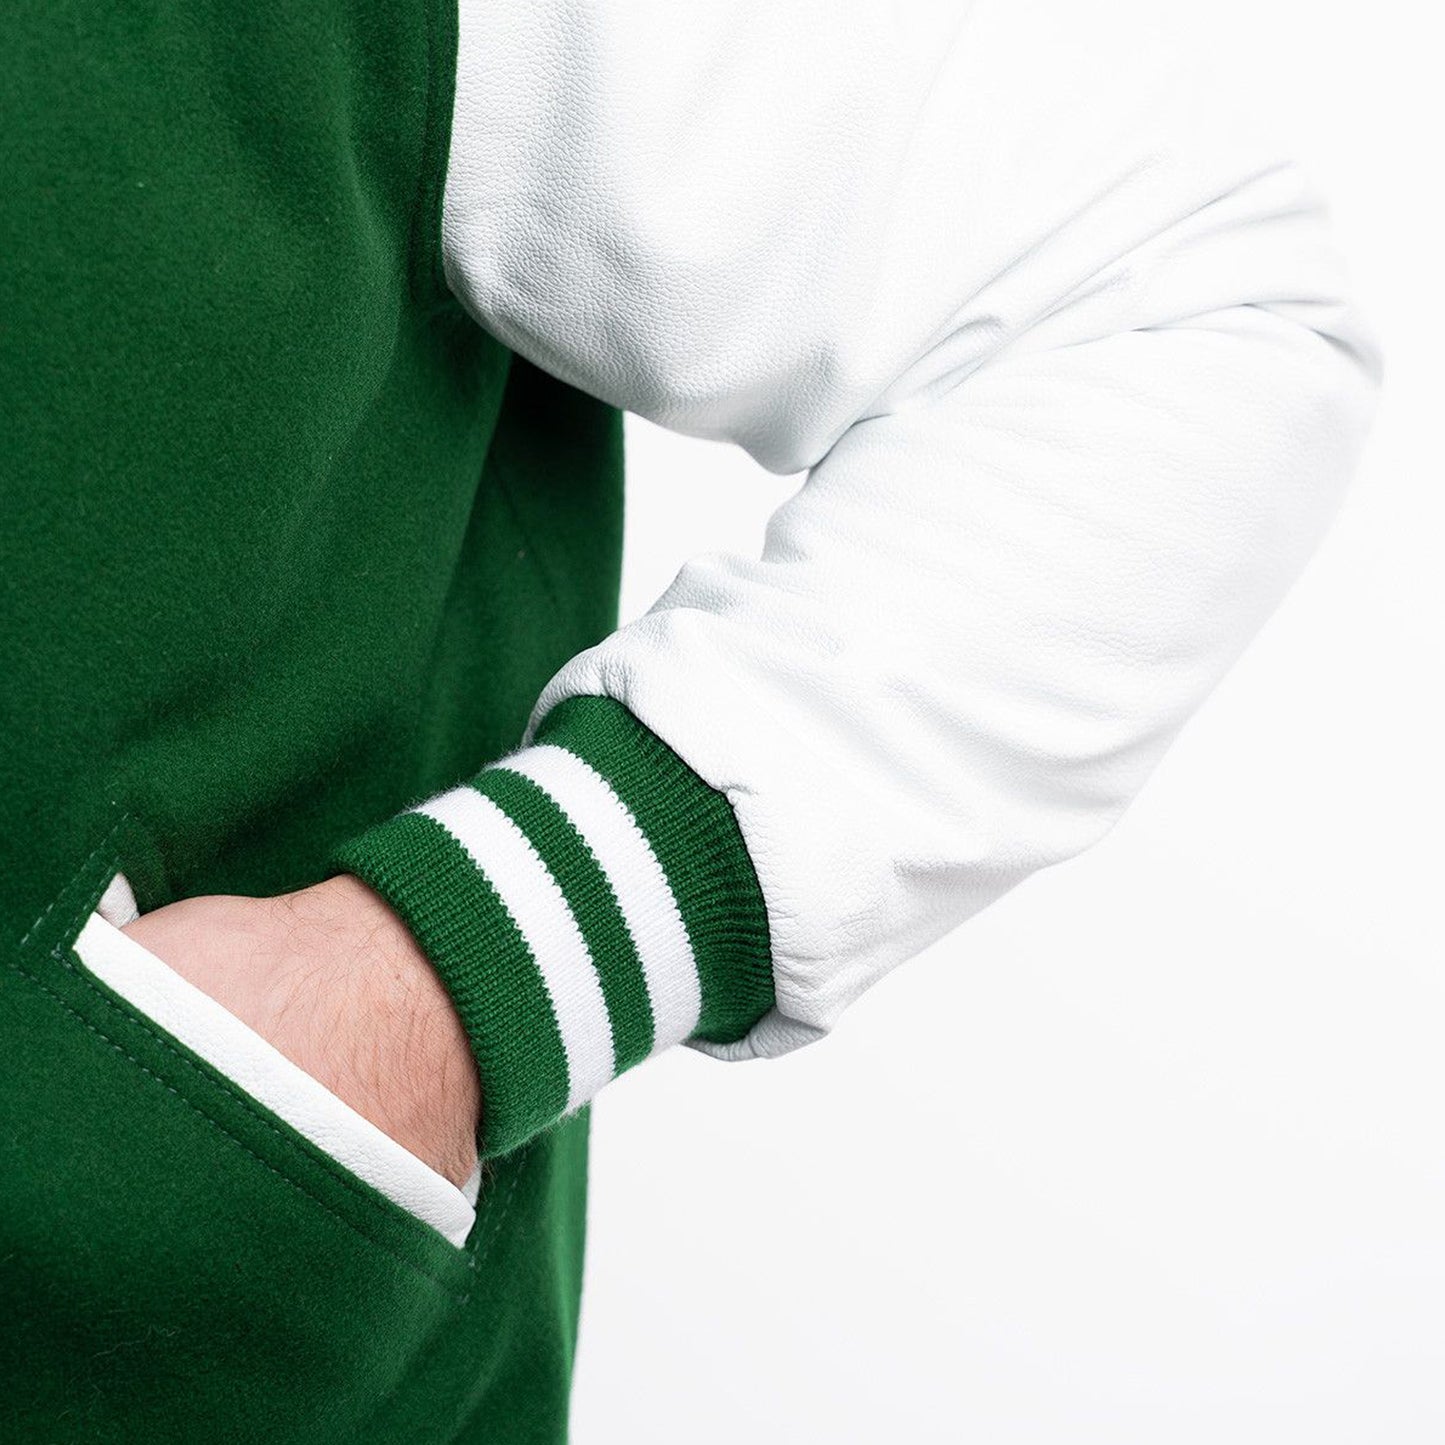 Men's Green Baseball Jacket